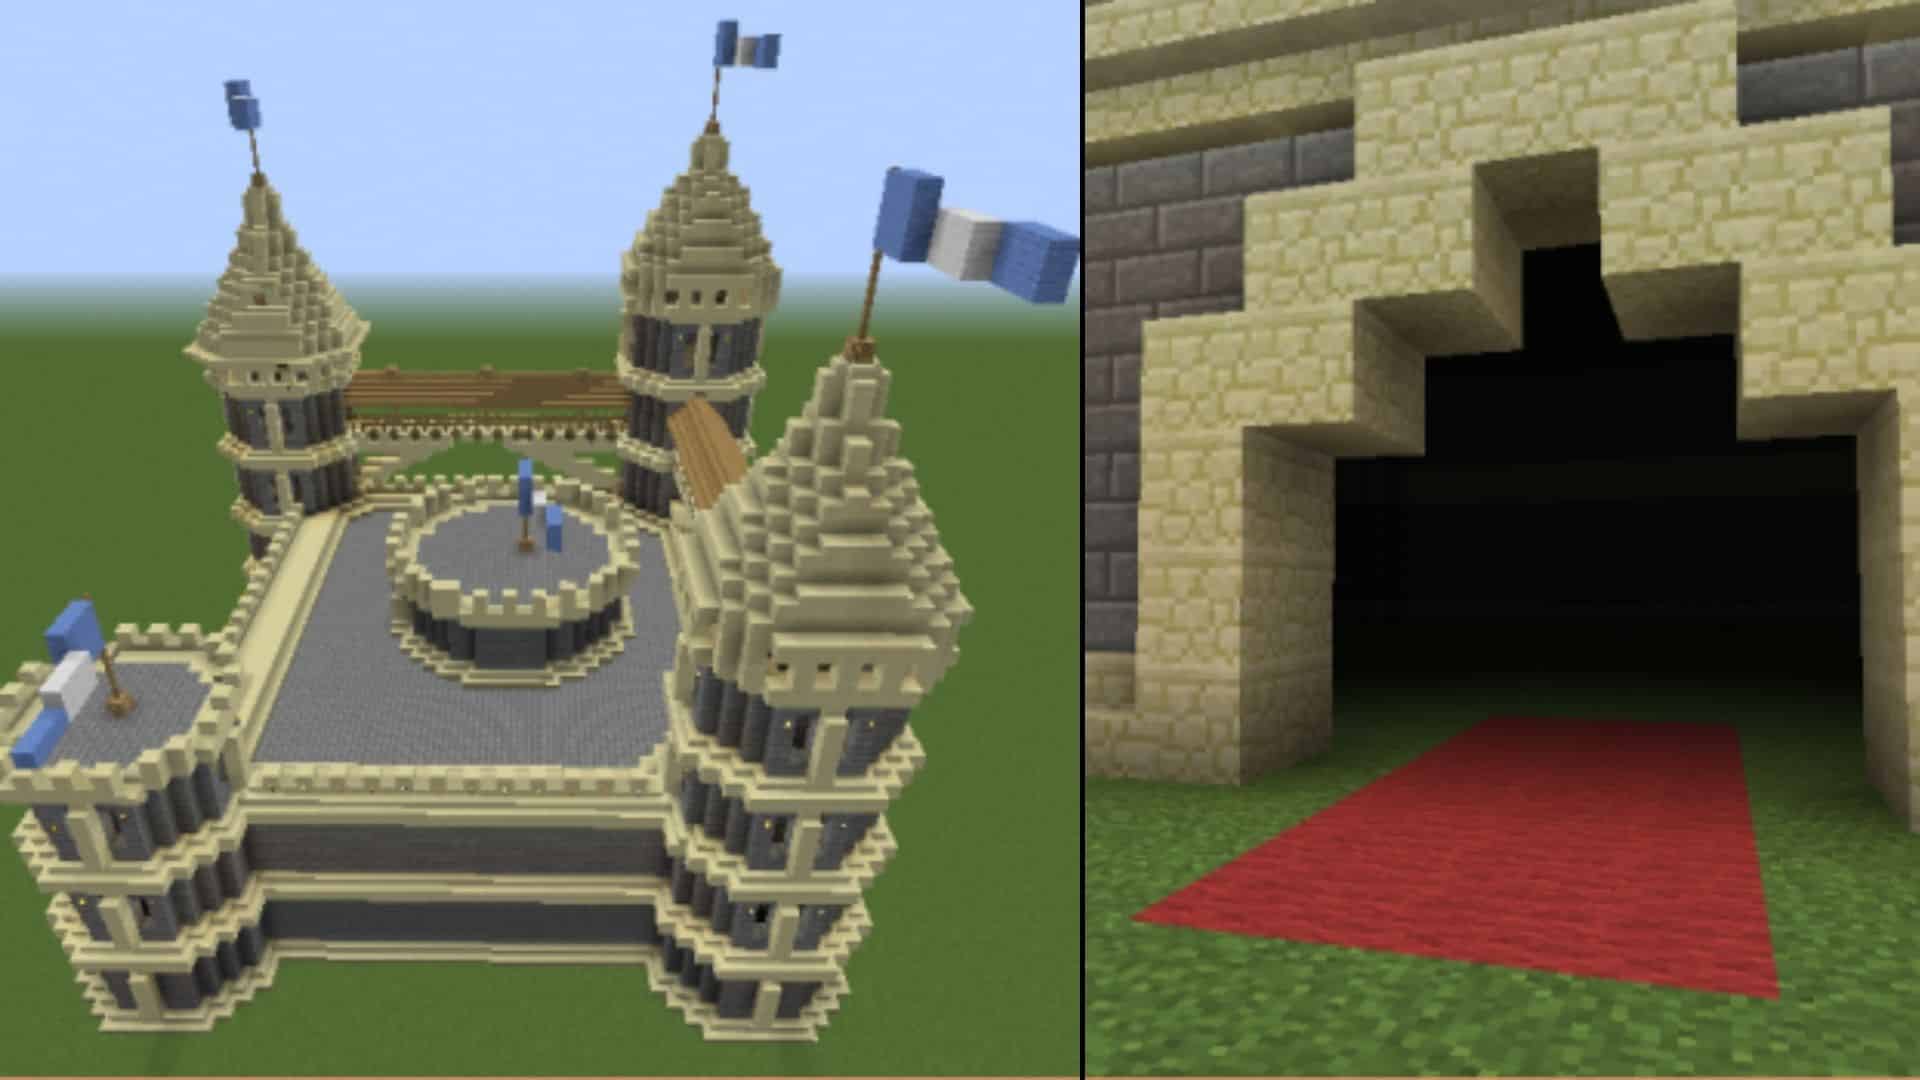 A Large Minecraft castle